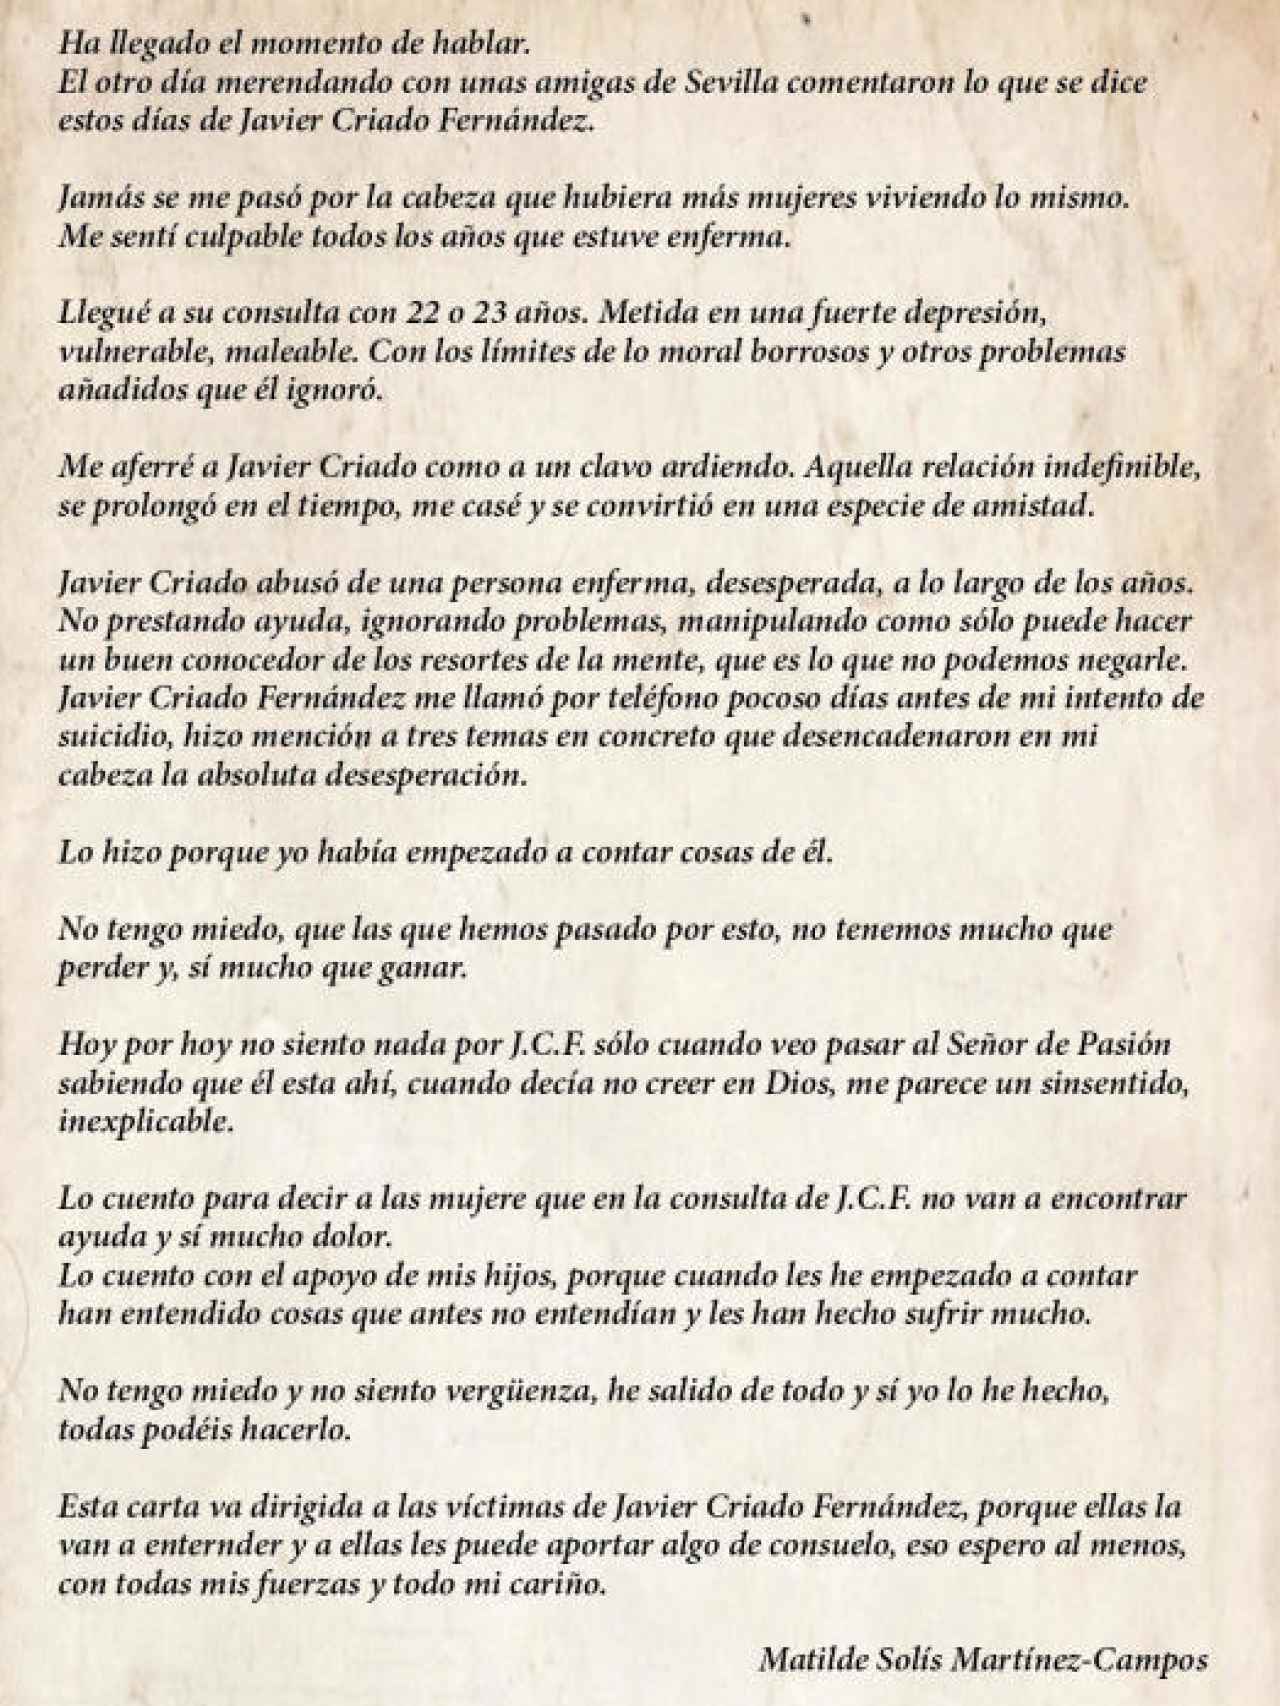 La carta íntegra de Matilde Solís.